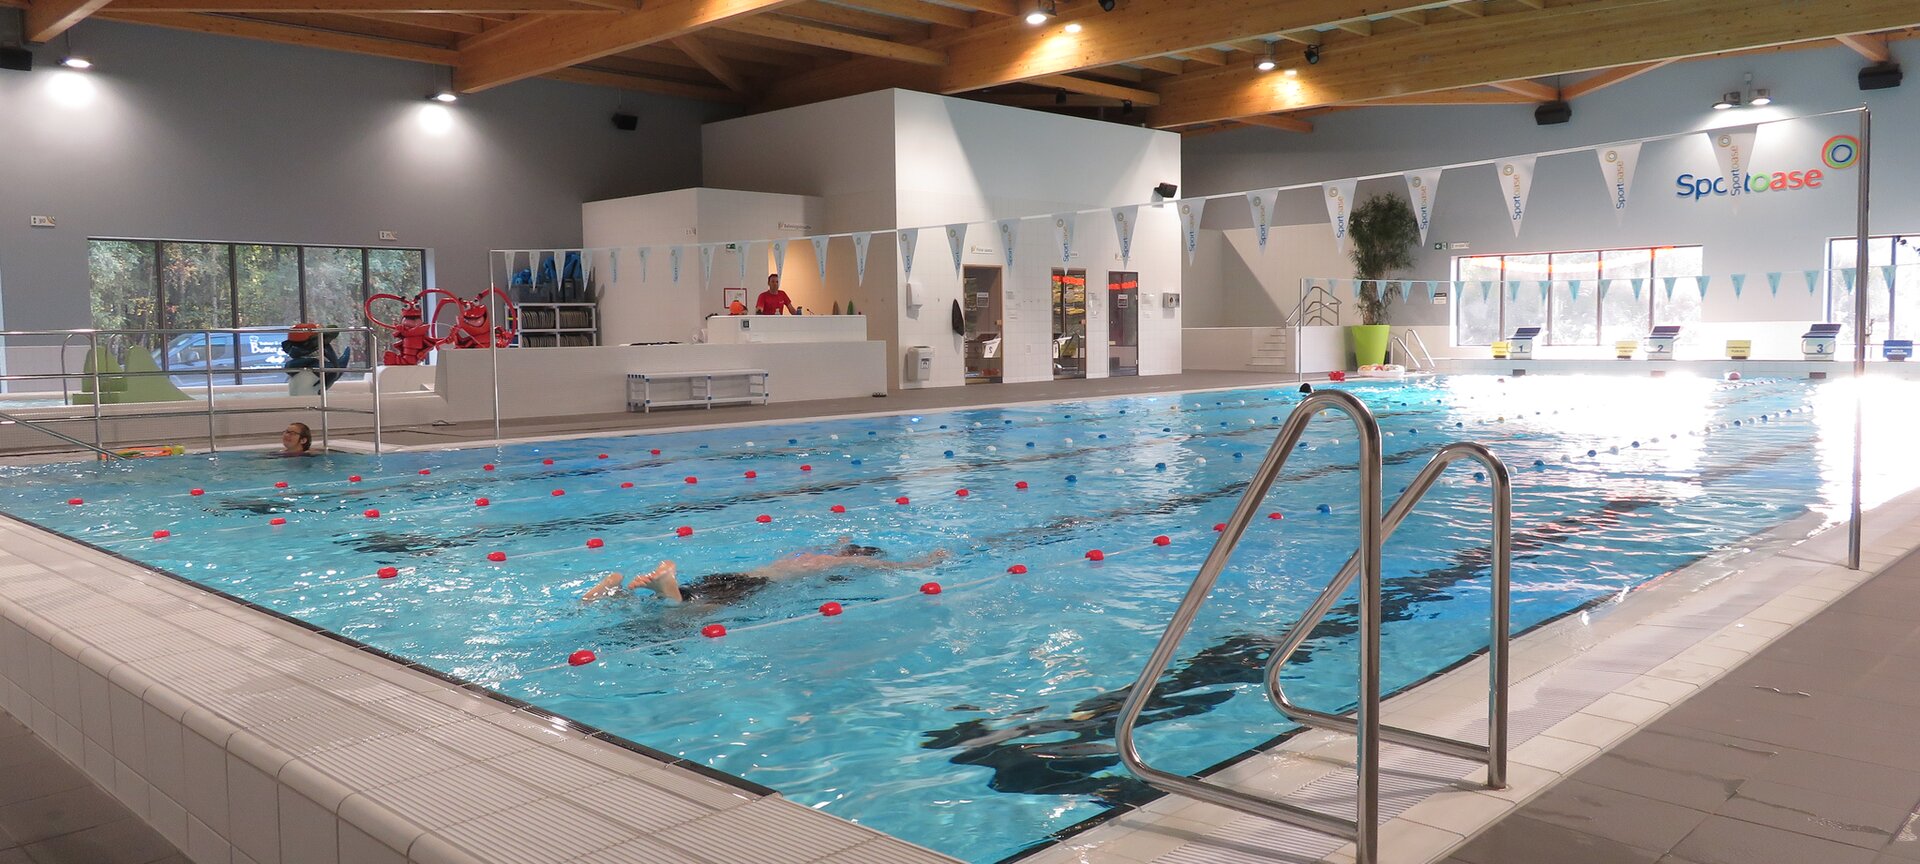 Sportoase Montaignehof Lanaken - Zwembad + wellness